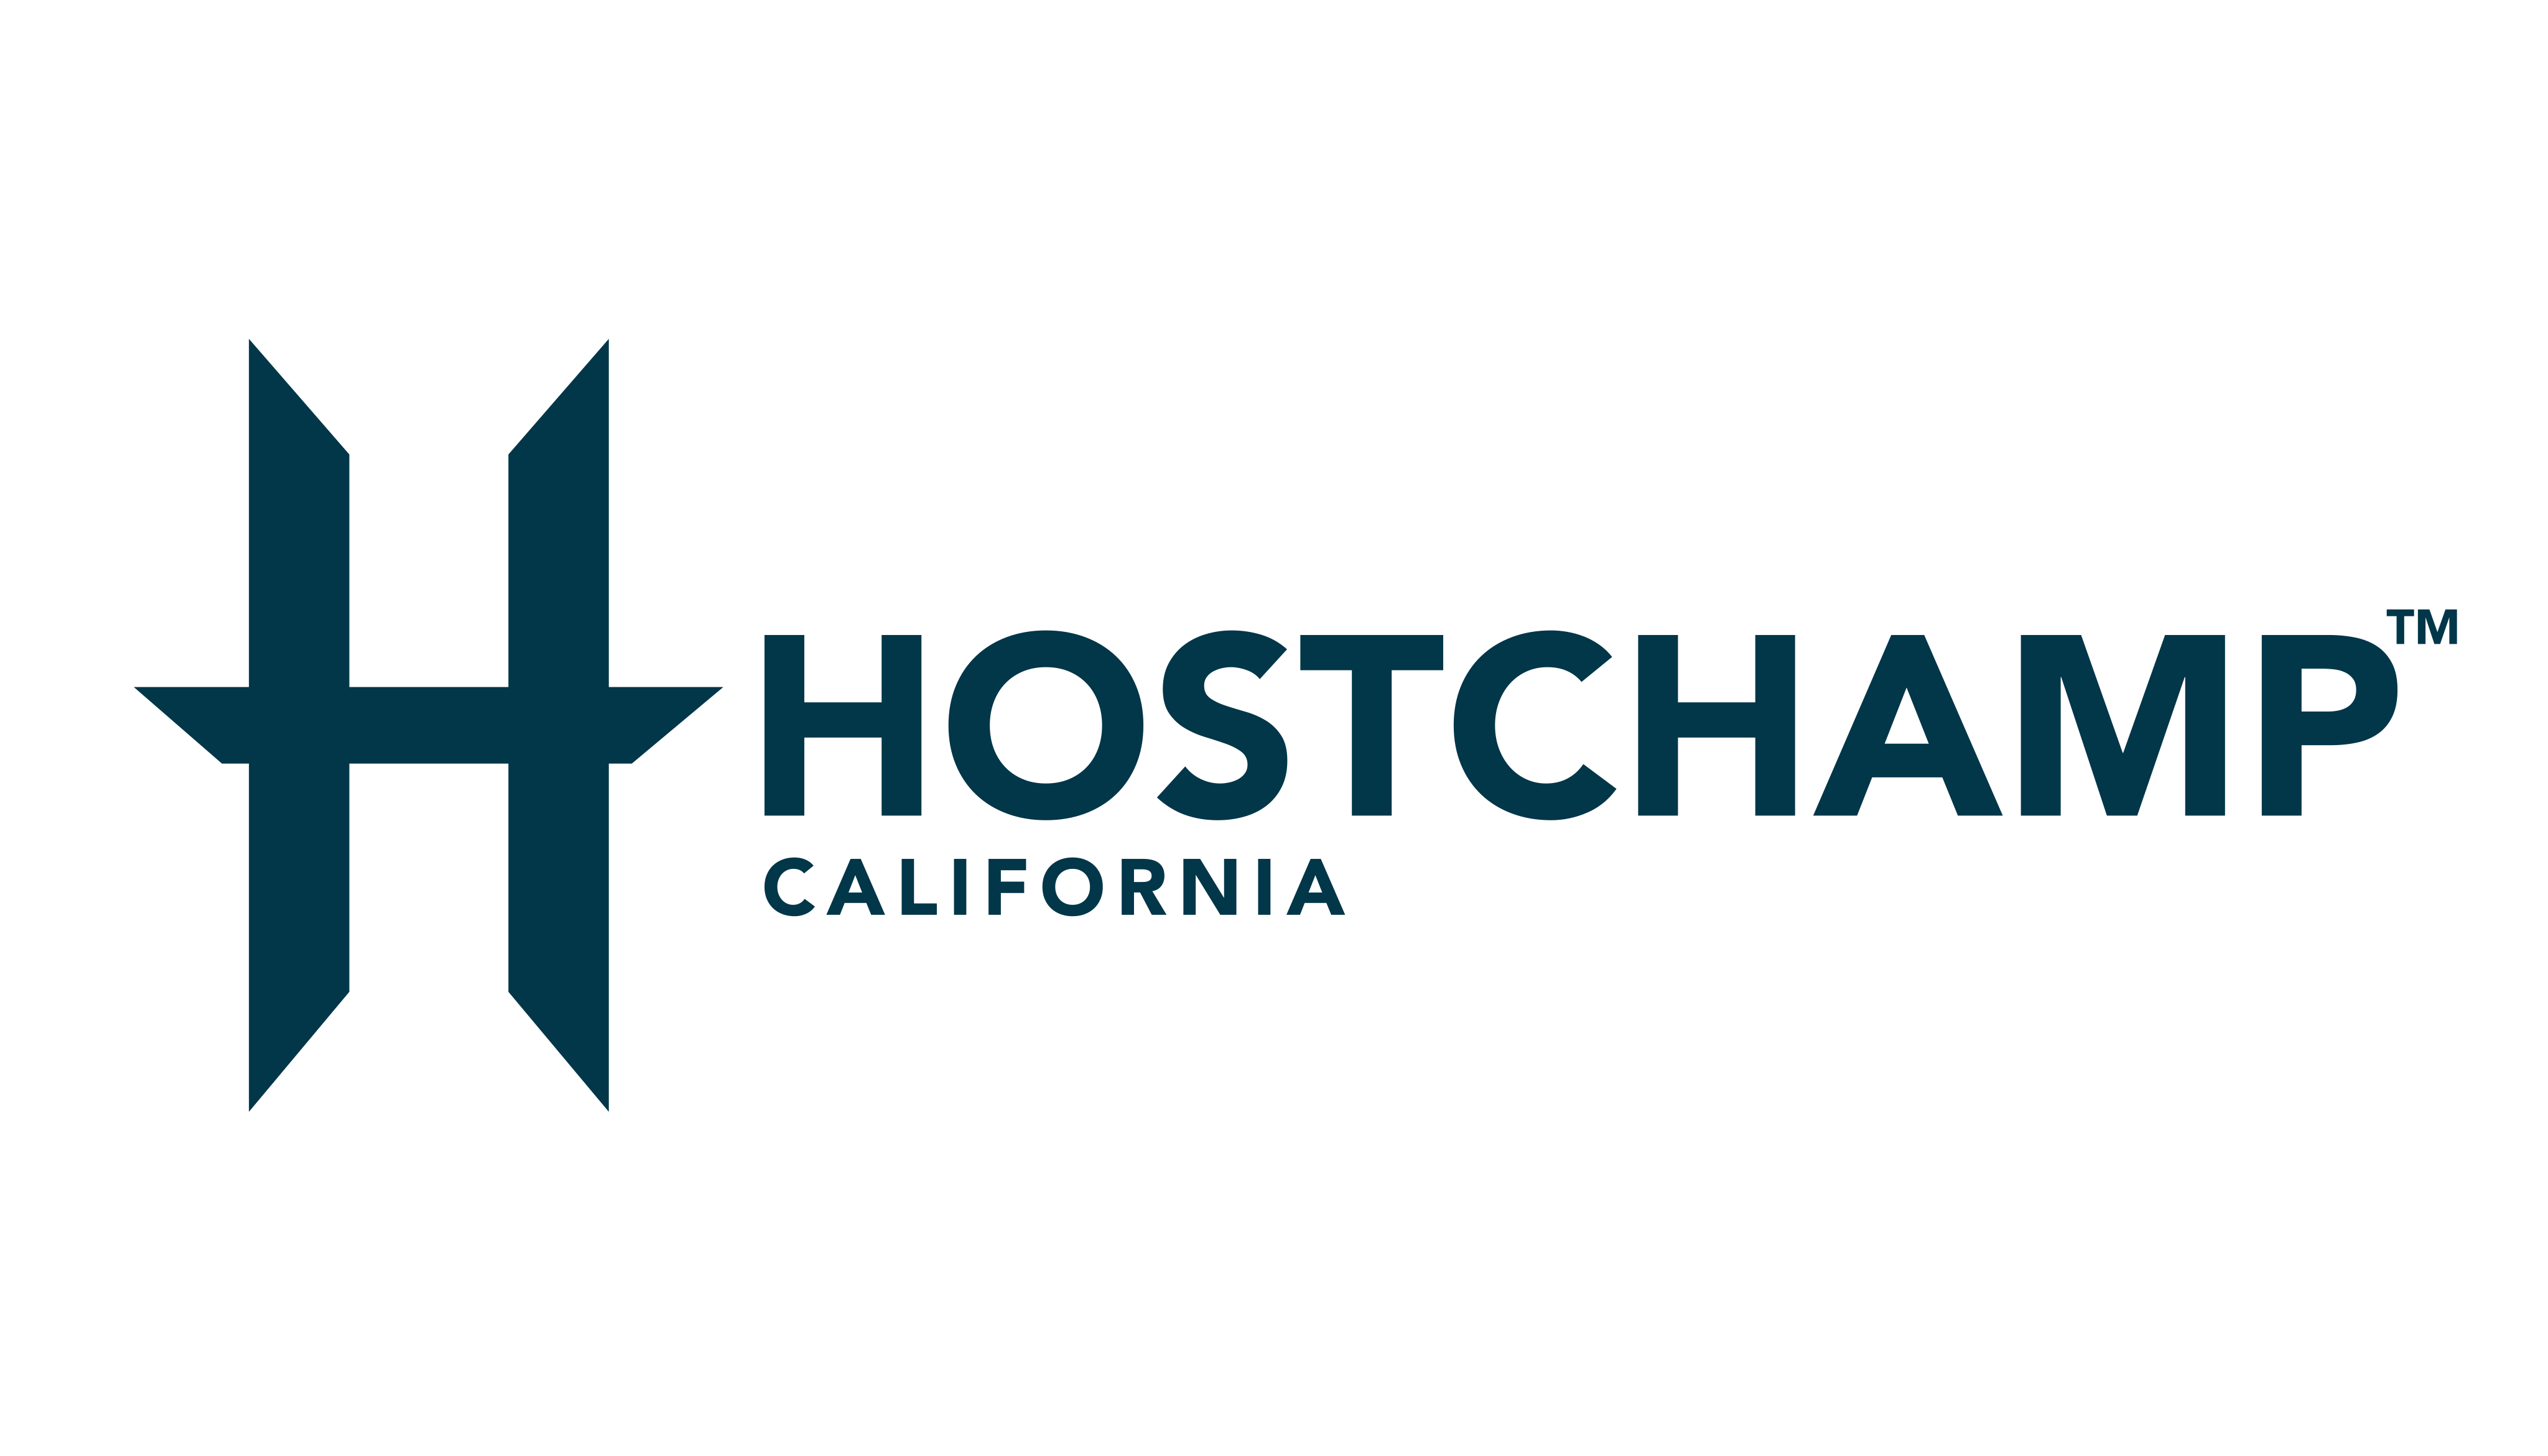 HOSTCHAMP™ California